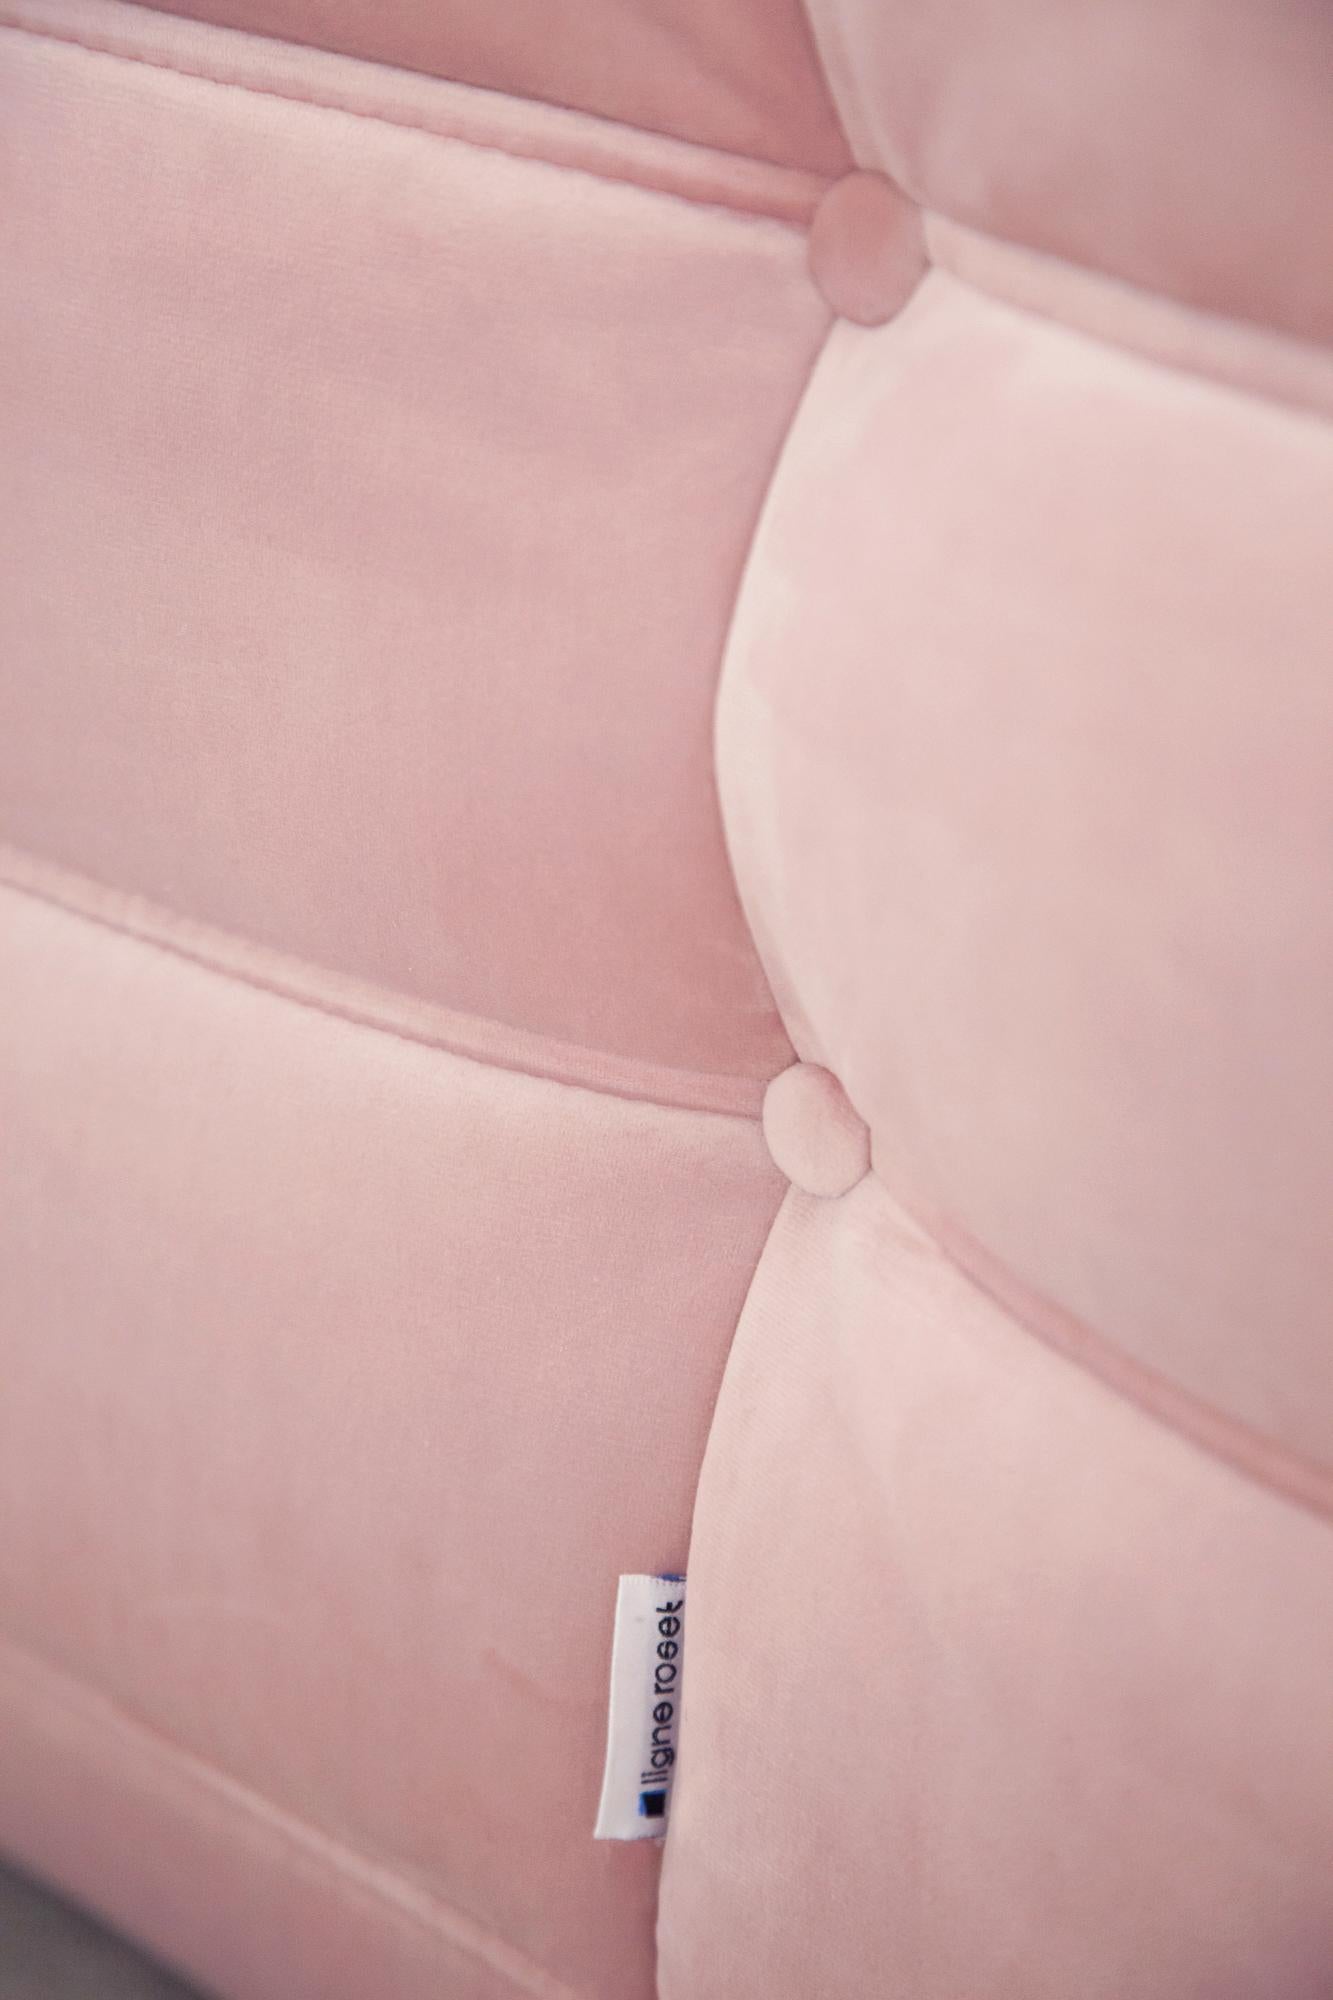 Togo 3-Seat Sofa in Pink Velvet by Michel Ducaroy for Ligne Roset For Sale 2